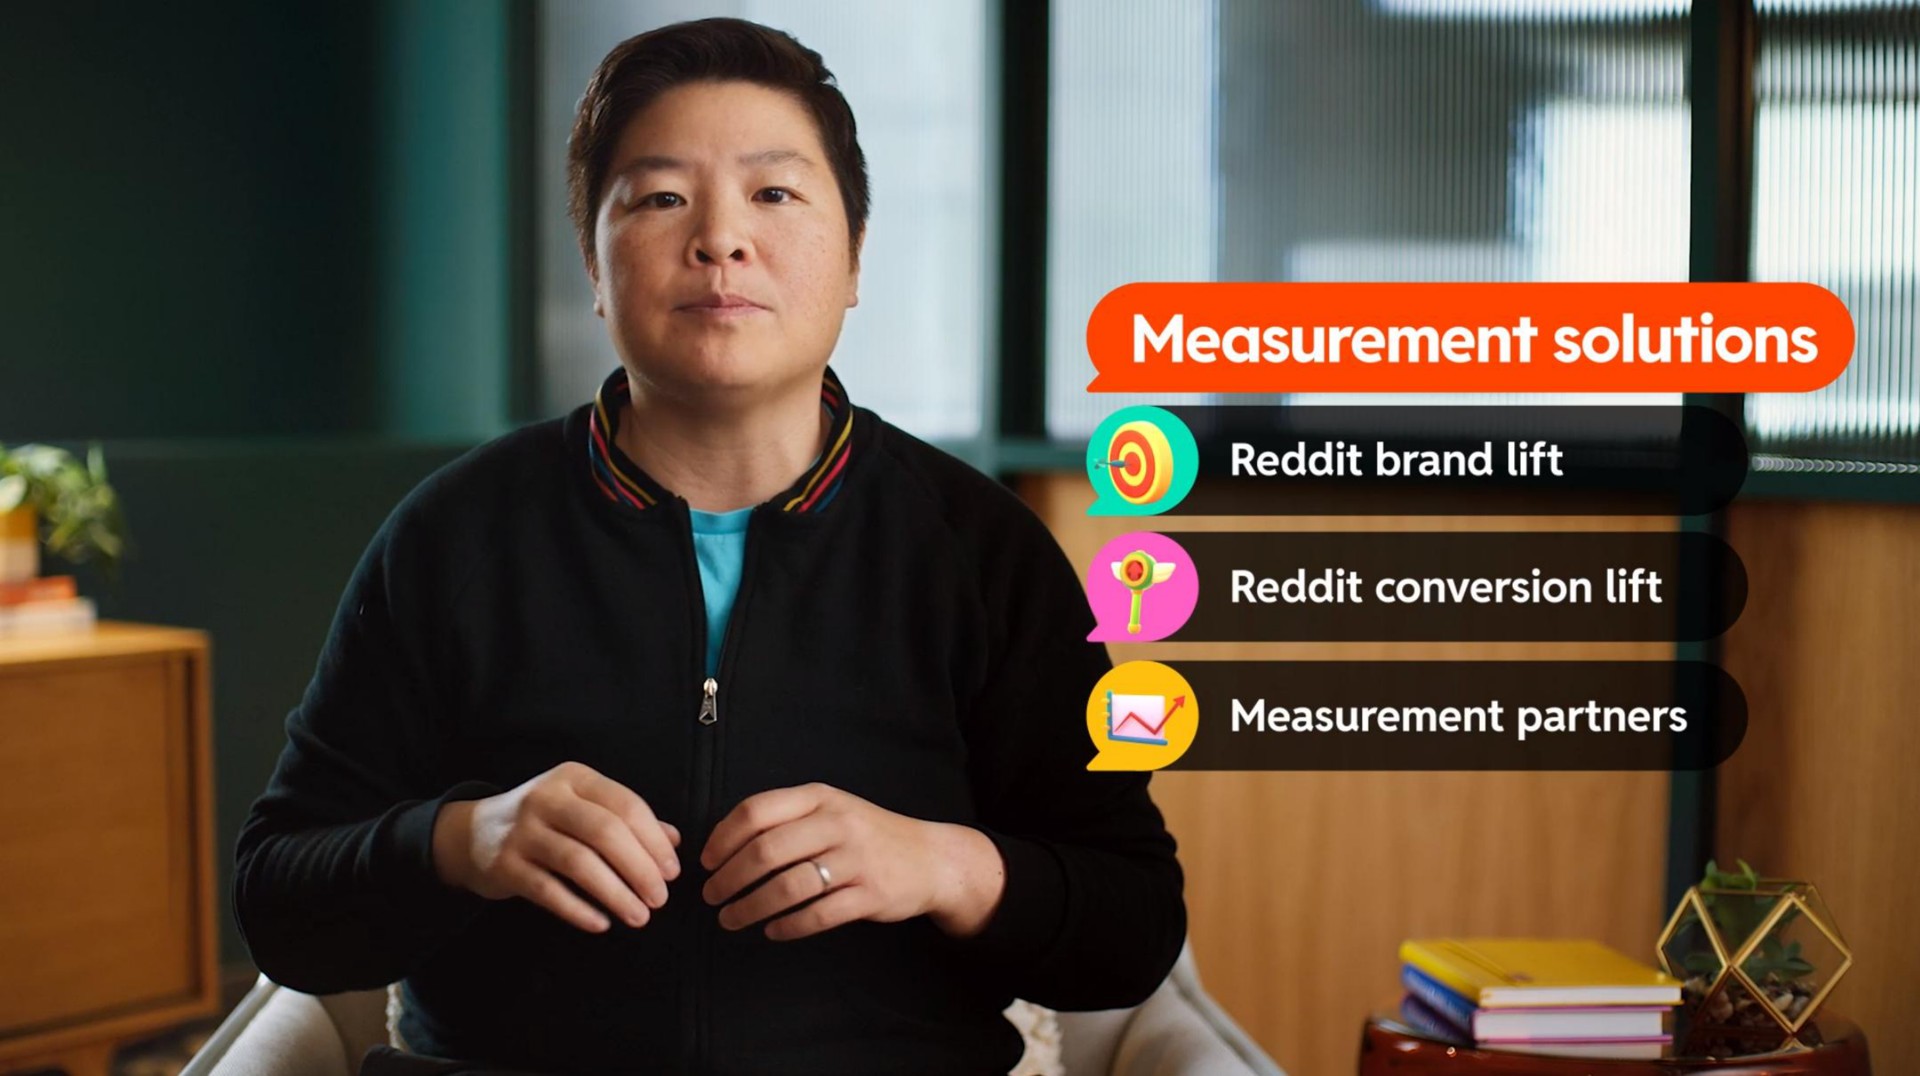 am brand lift conversion lift i measurement partners | Reddit